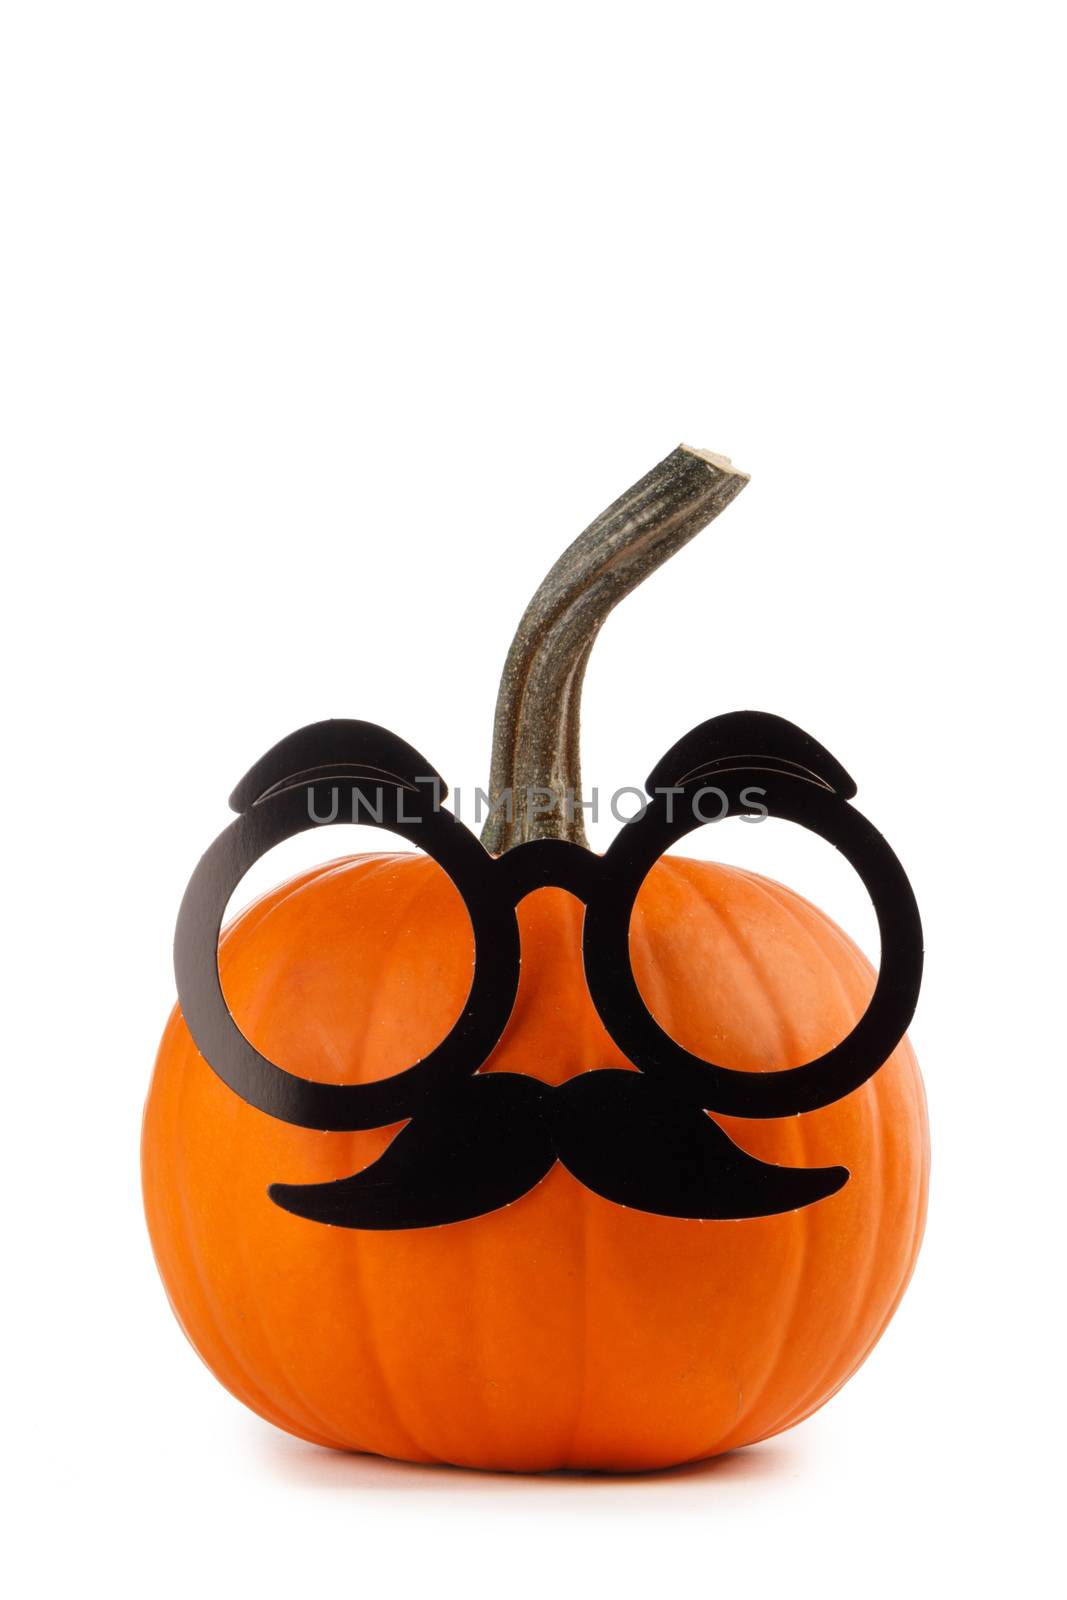 Fun halloween pumpkin isolated on white background